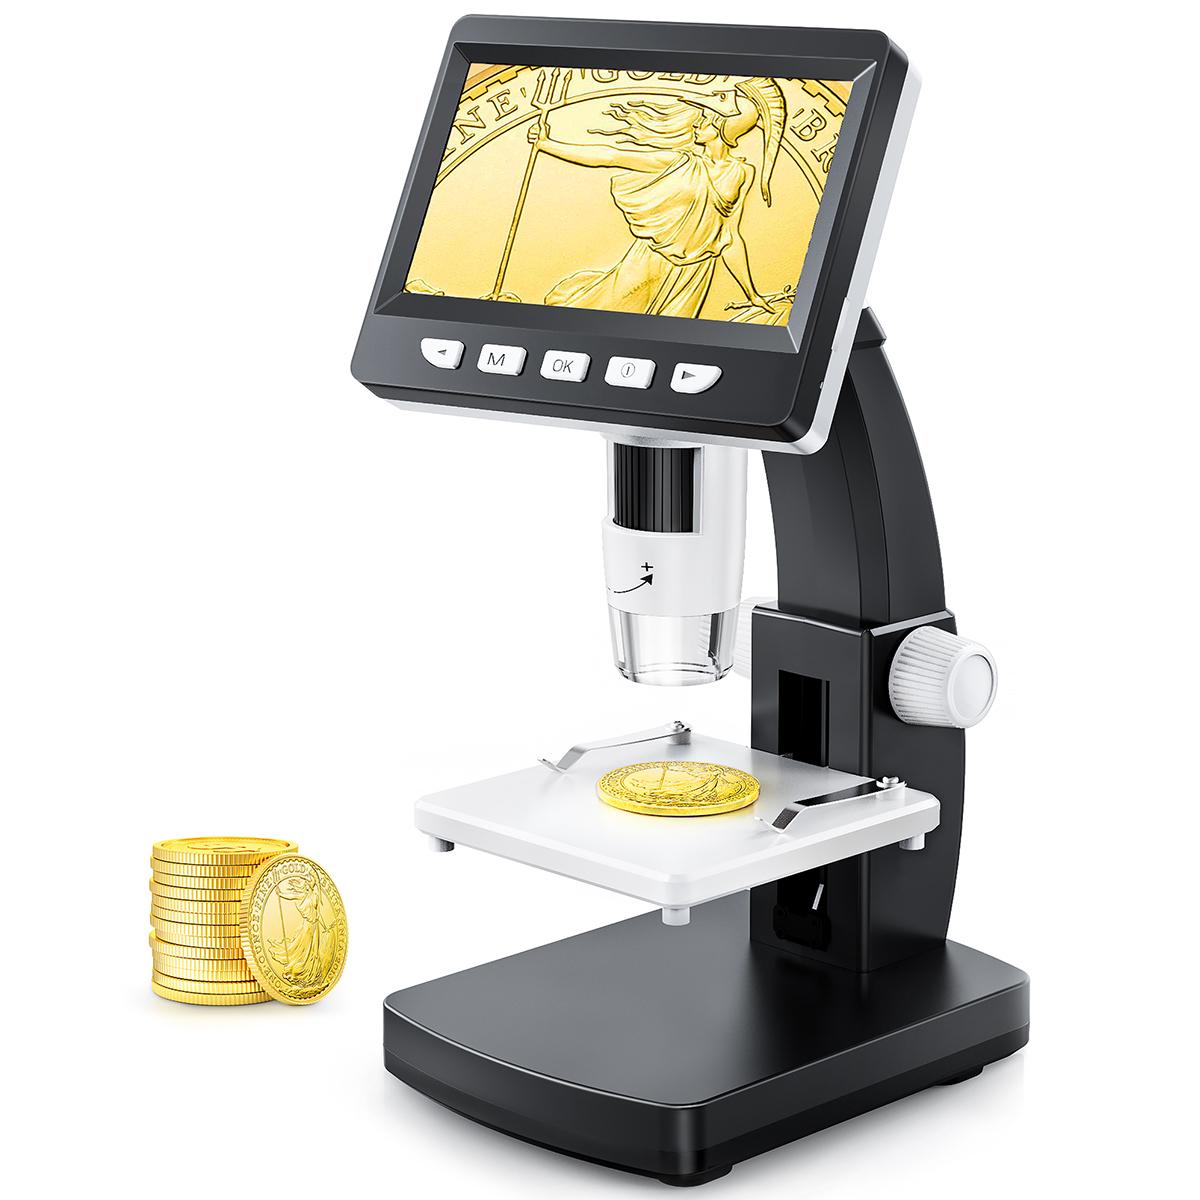 Mini Microscope Portable avec Lumière LED Lumineux De Poche Aliexpress